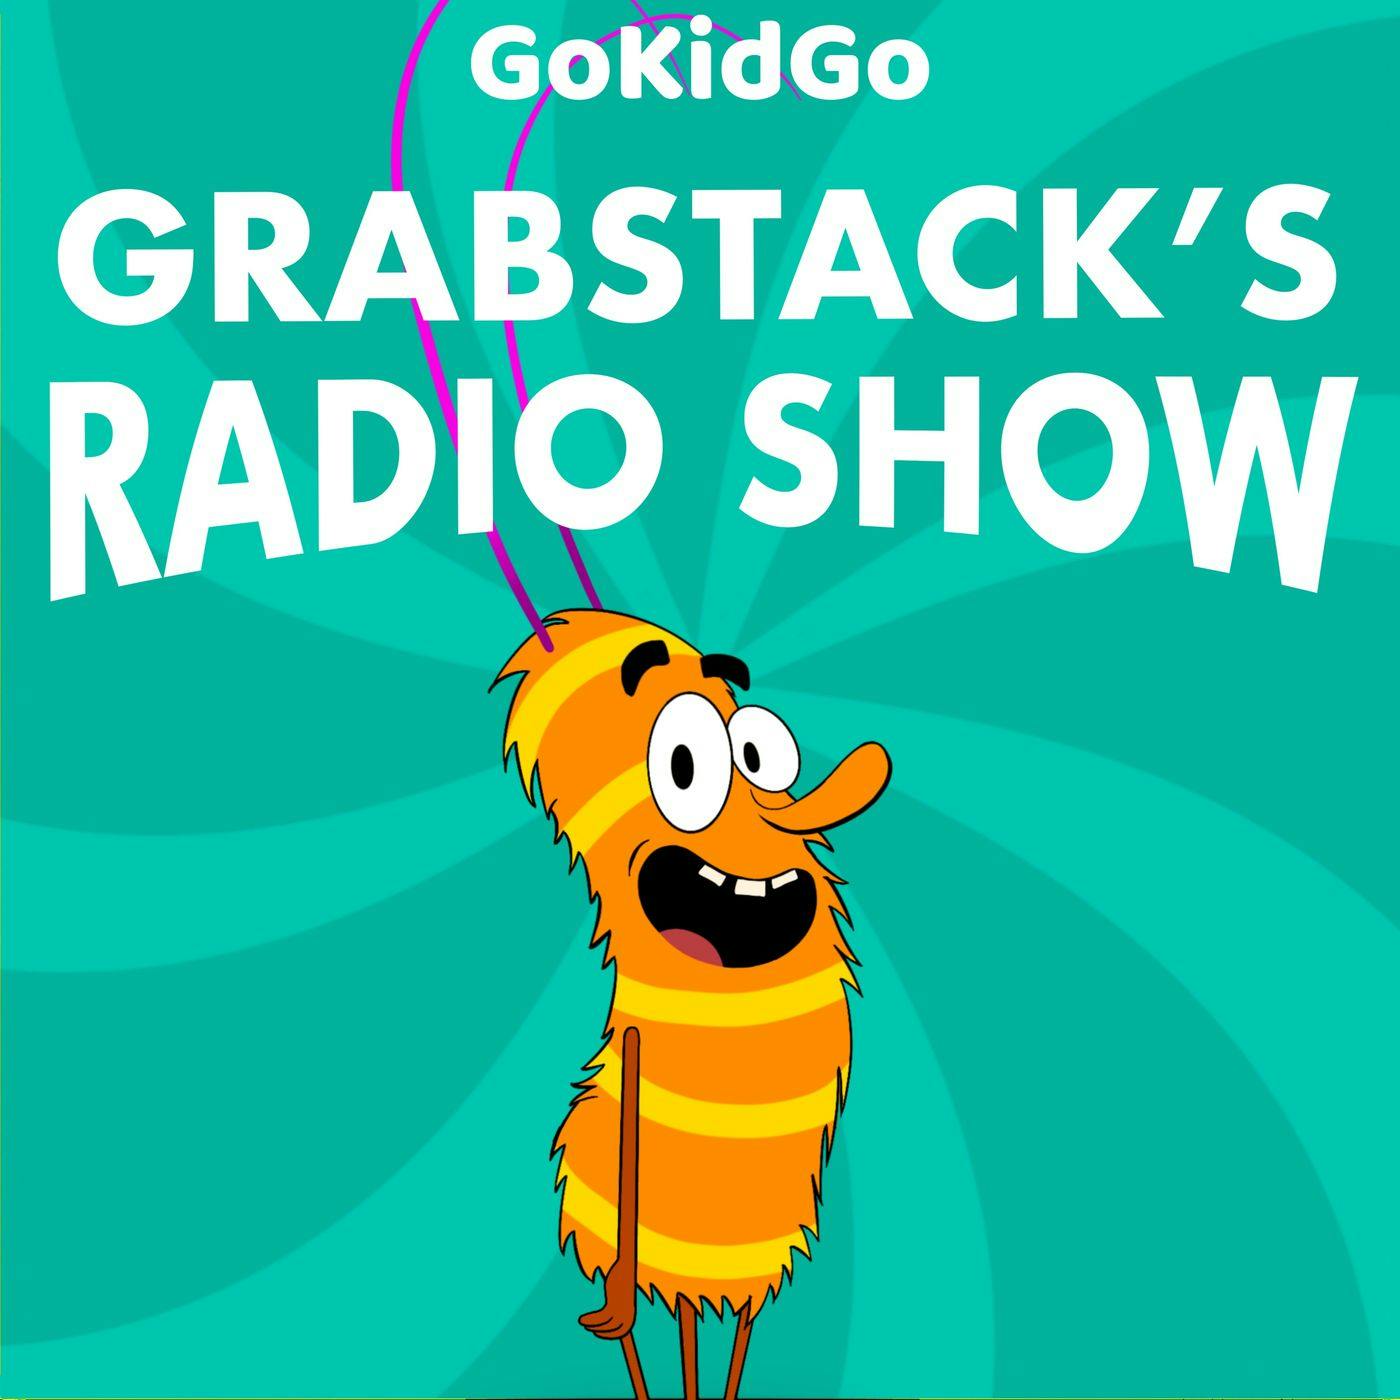 S1E3 - Grabstack Radio Show: Riddle Fest